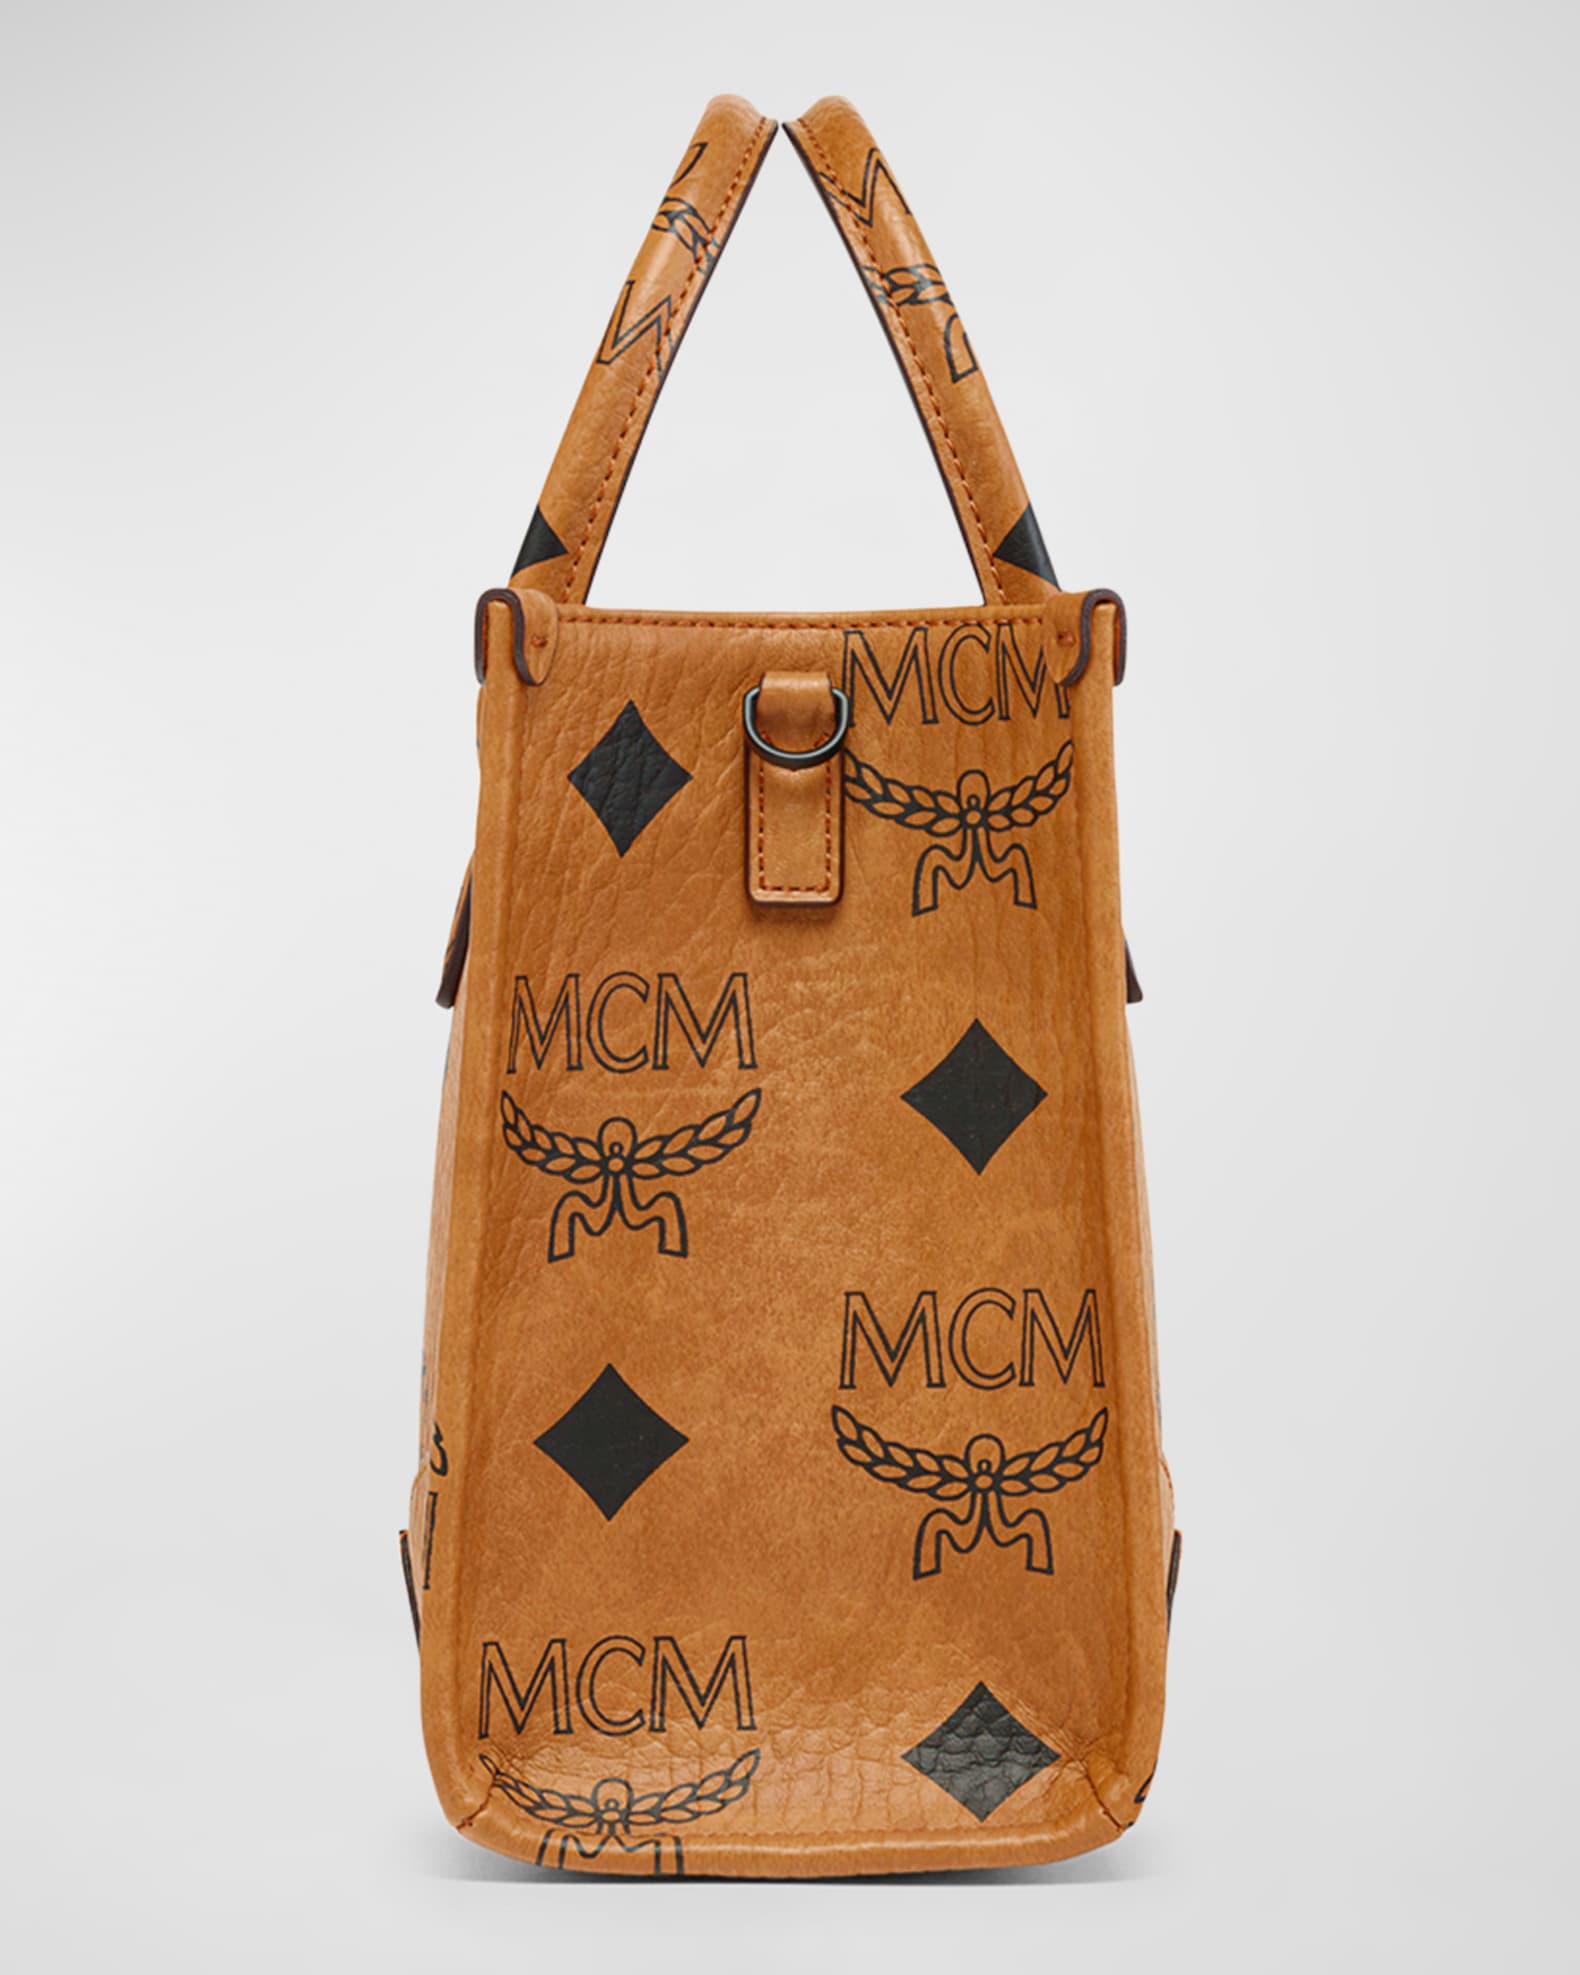 MCM Bucket Bag Orange - $250 - From Aileen